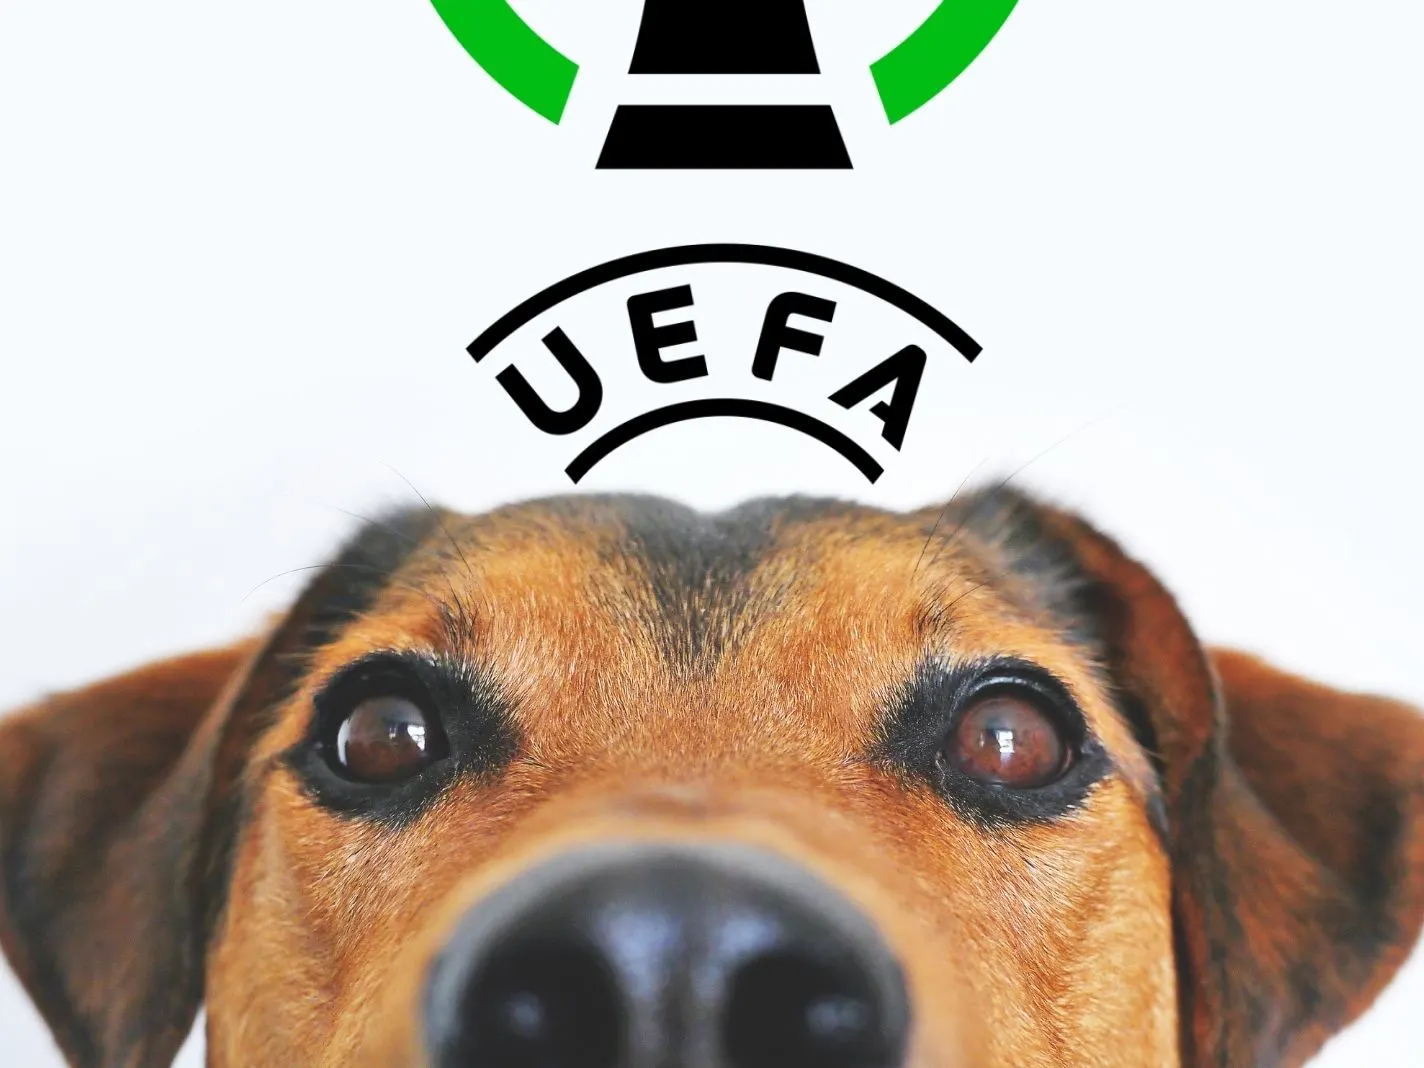 Photo of a dog below UEFA symbol